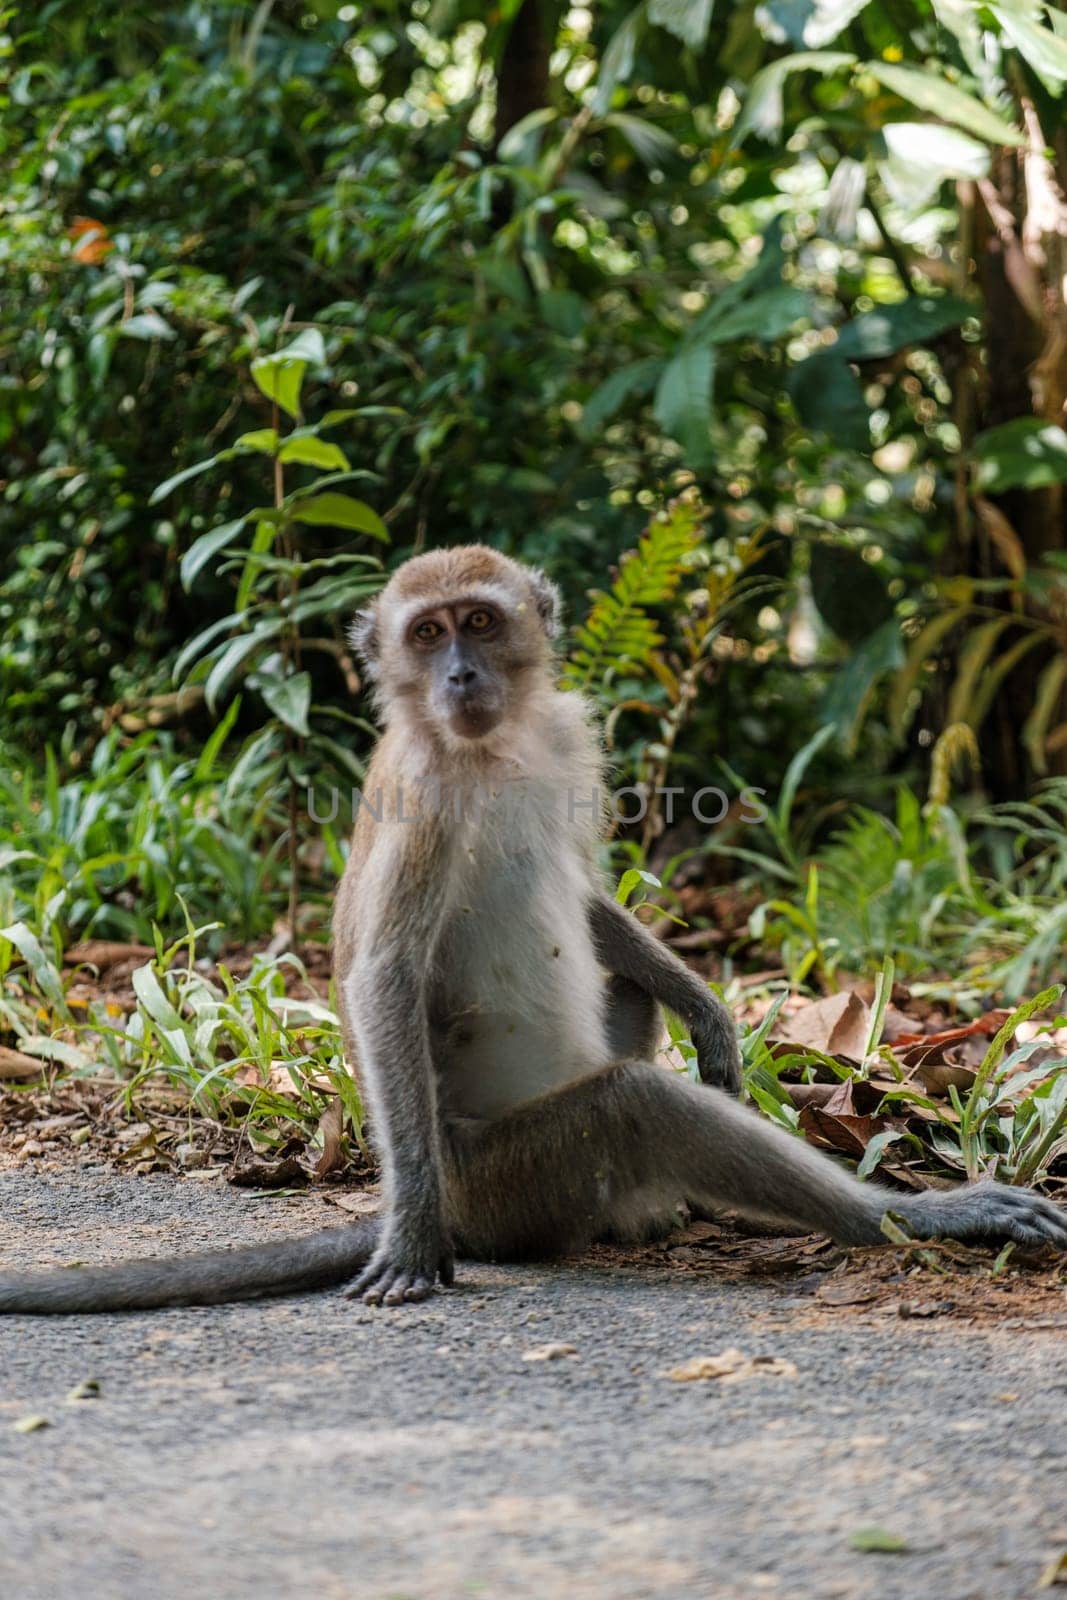 Monkey Sitting on Roadside Poses by jinhongljh